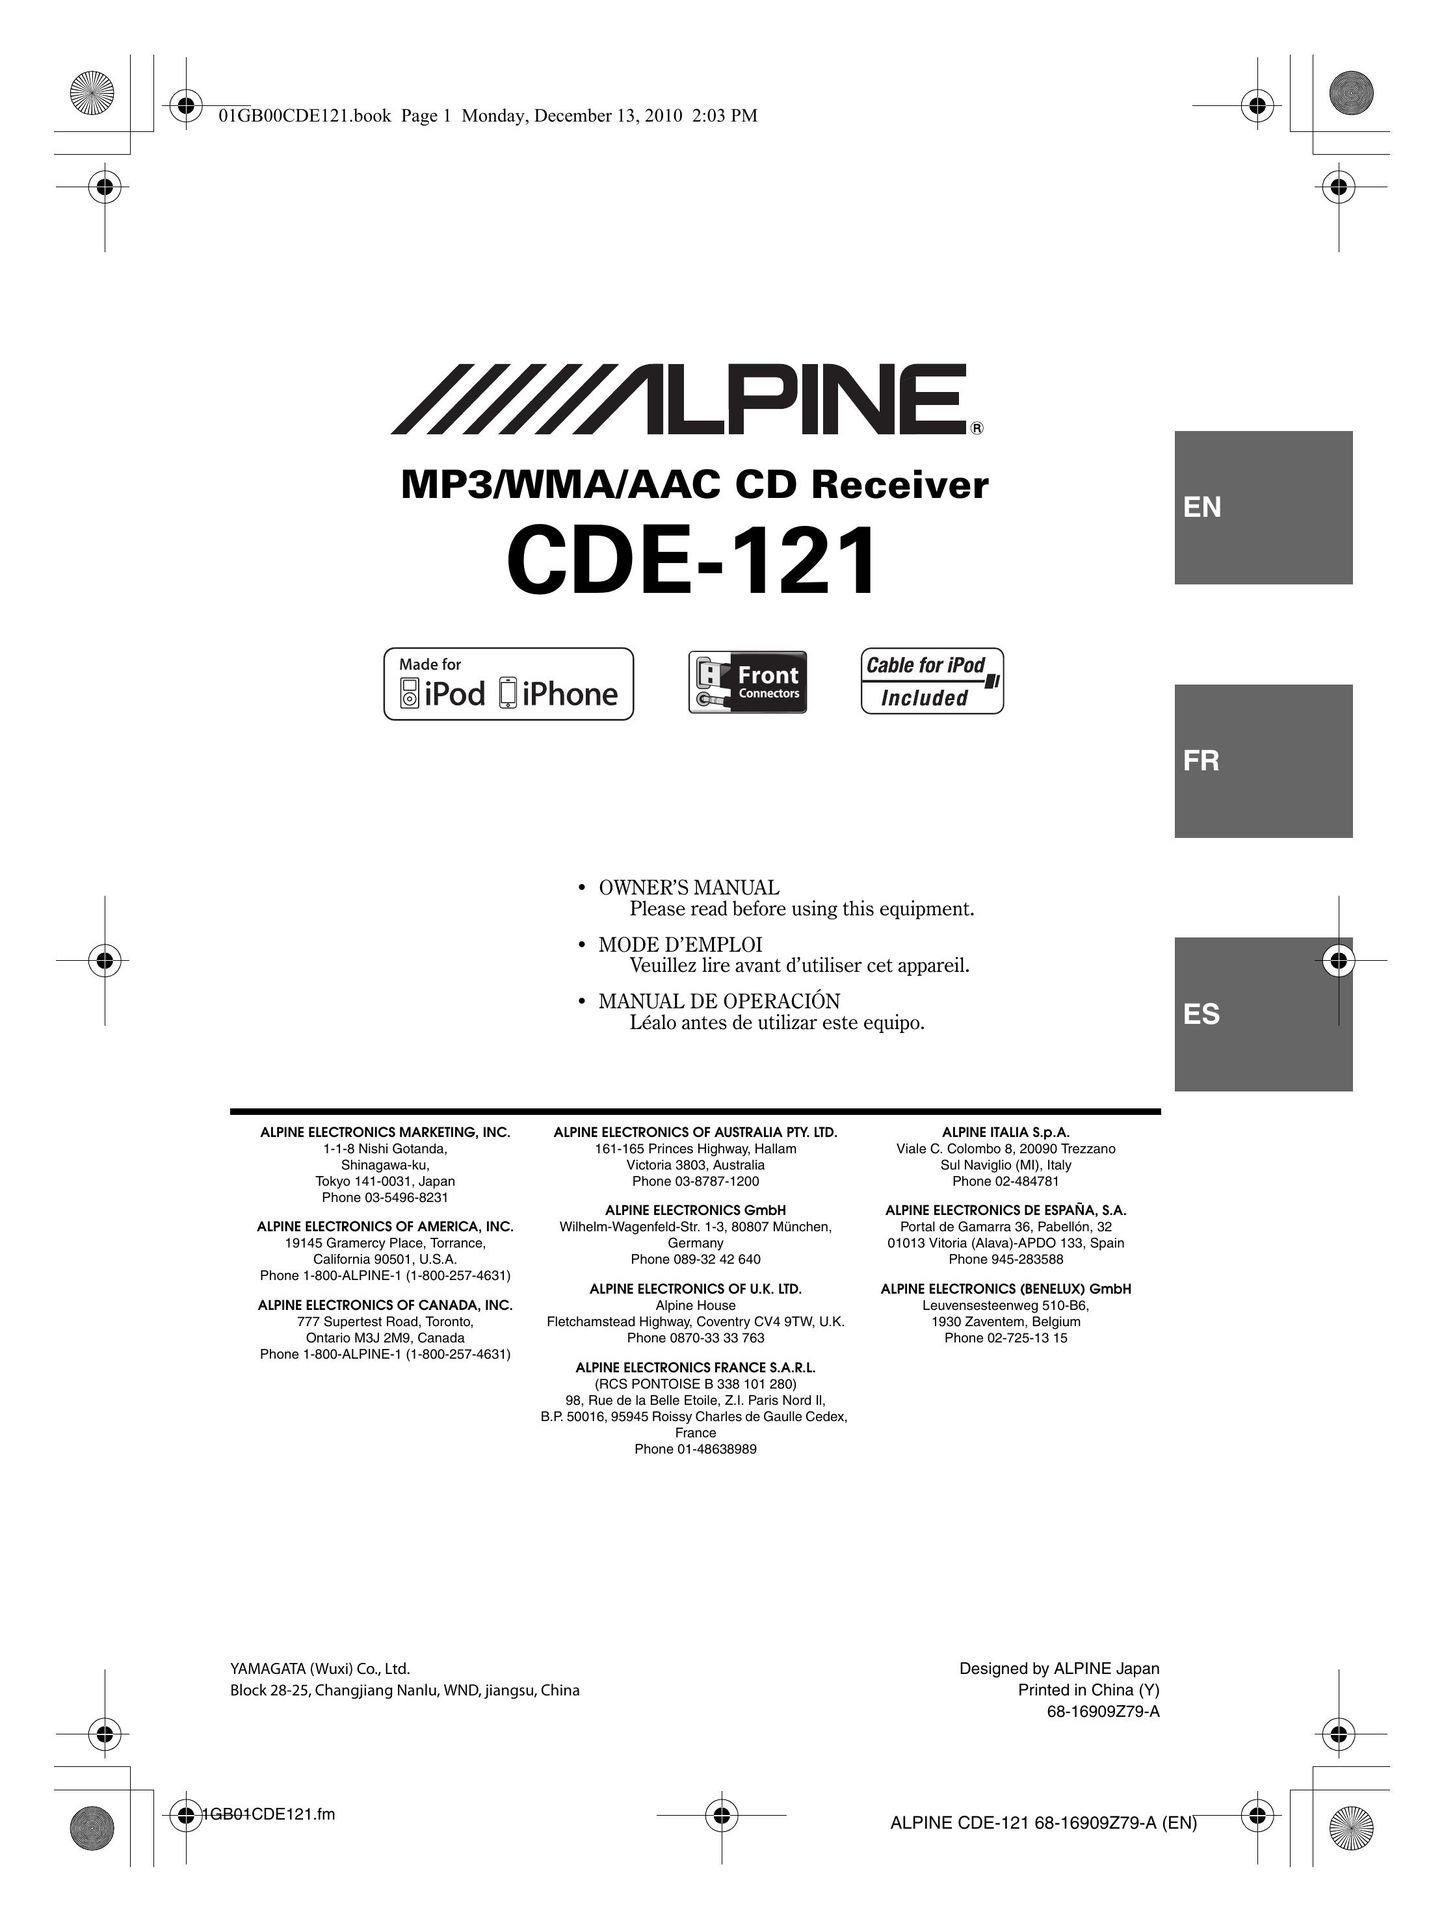 Alpine 68-16909Z79-A Car Stereo System User Manual